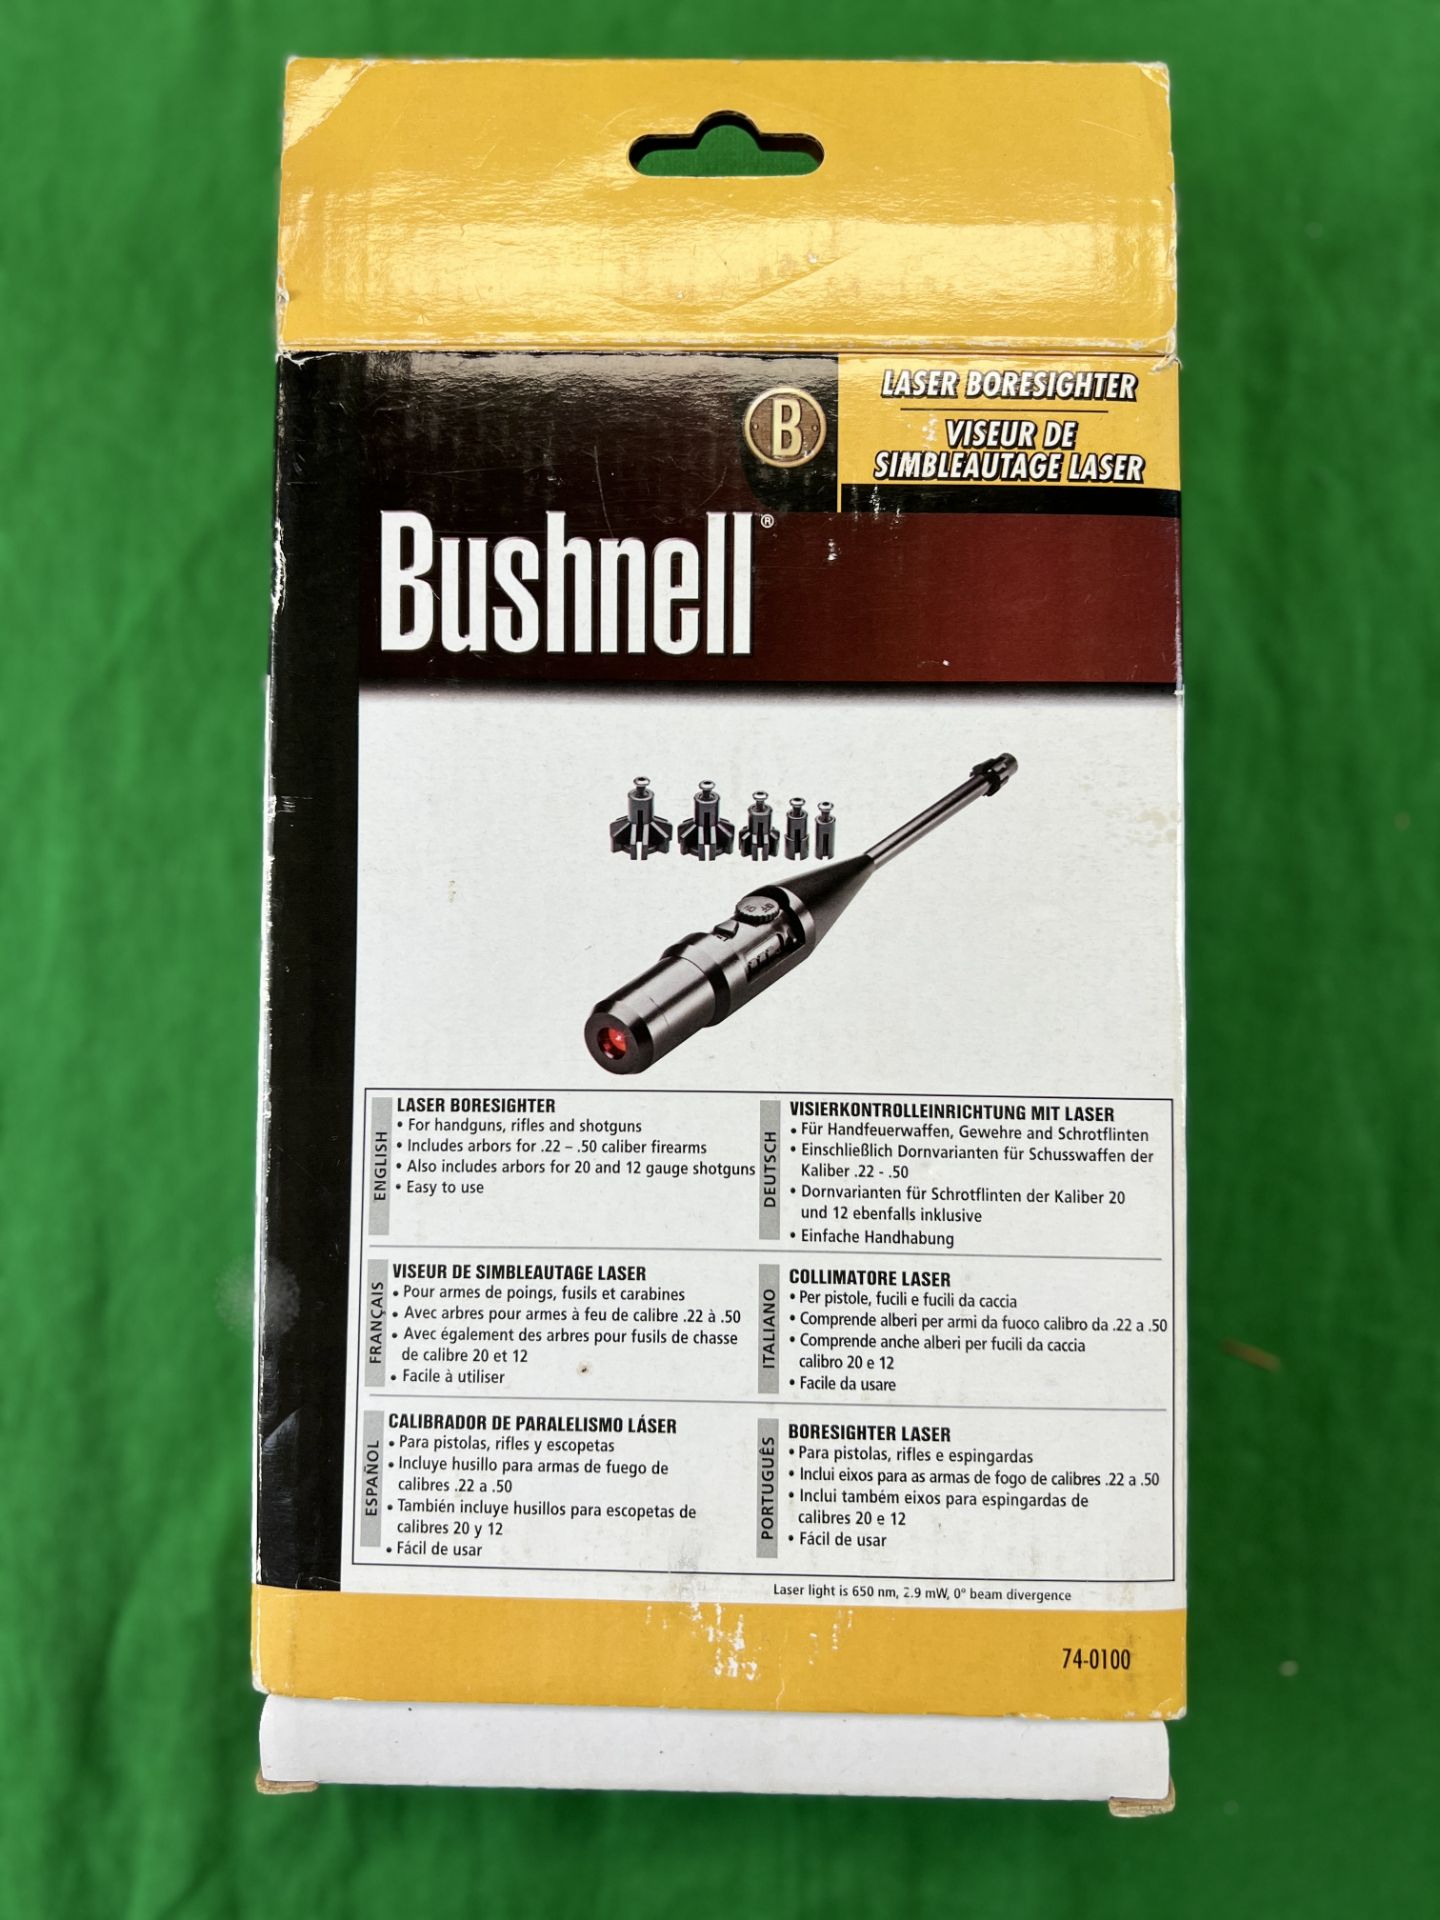 BUSHNELL LASER BORESIGHTER IN ORIGINAL BOX - Image 2 of 2